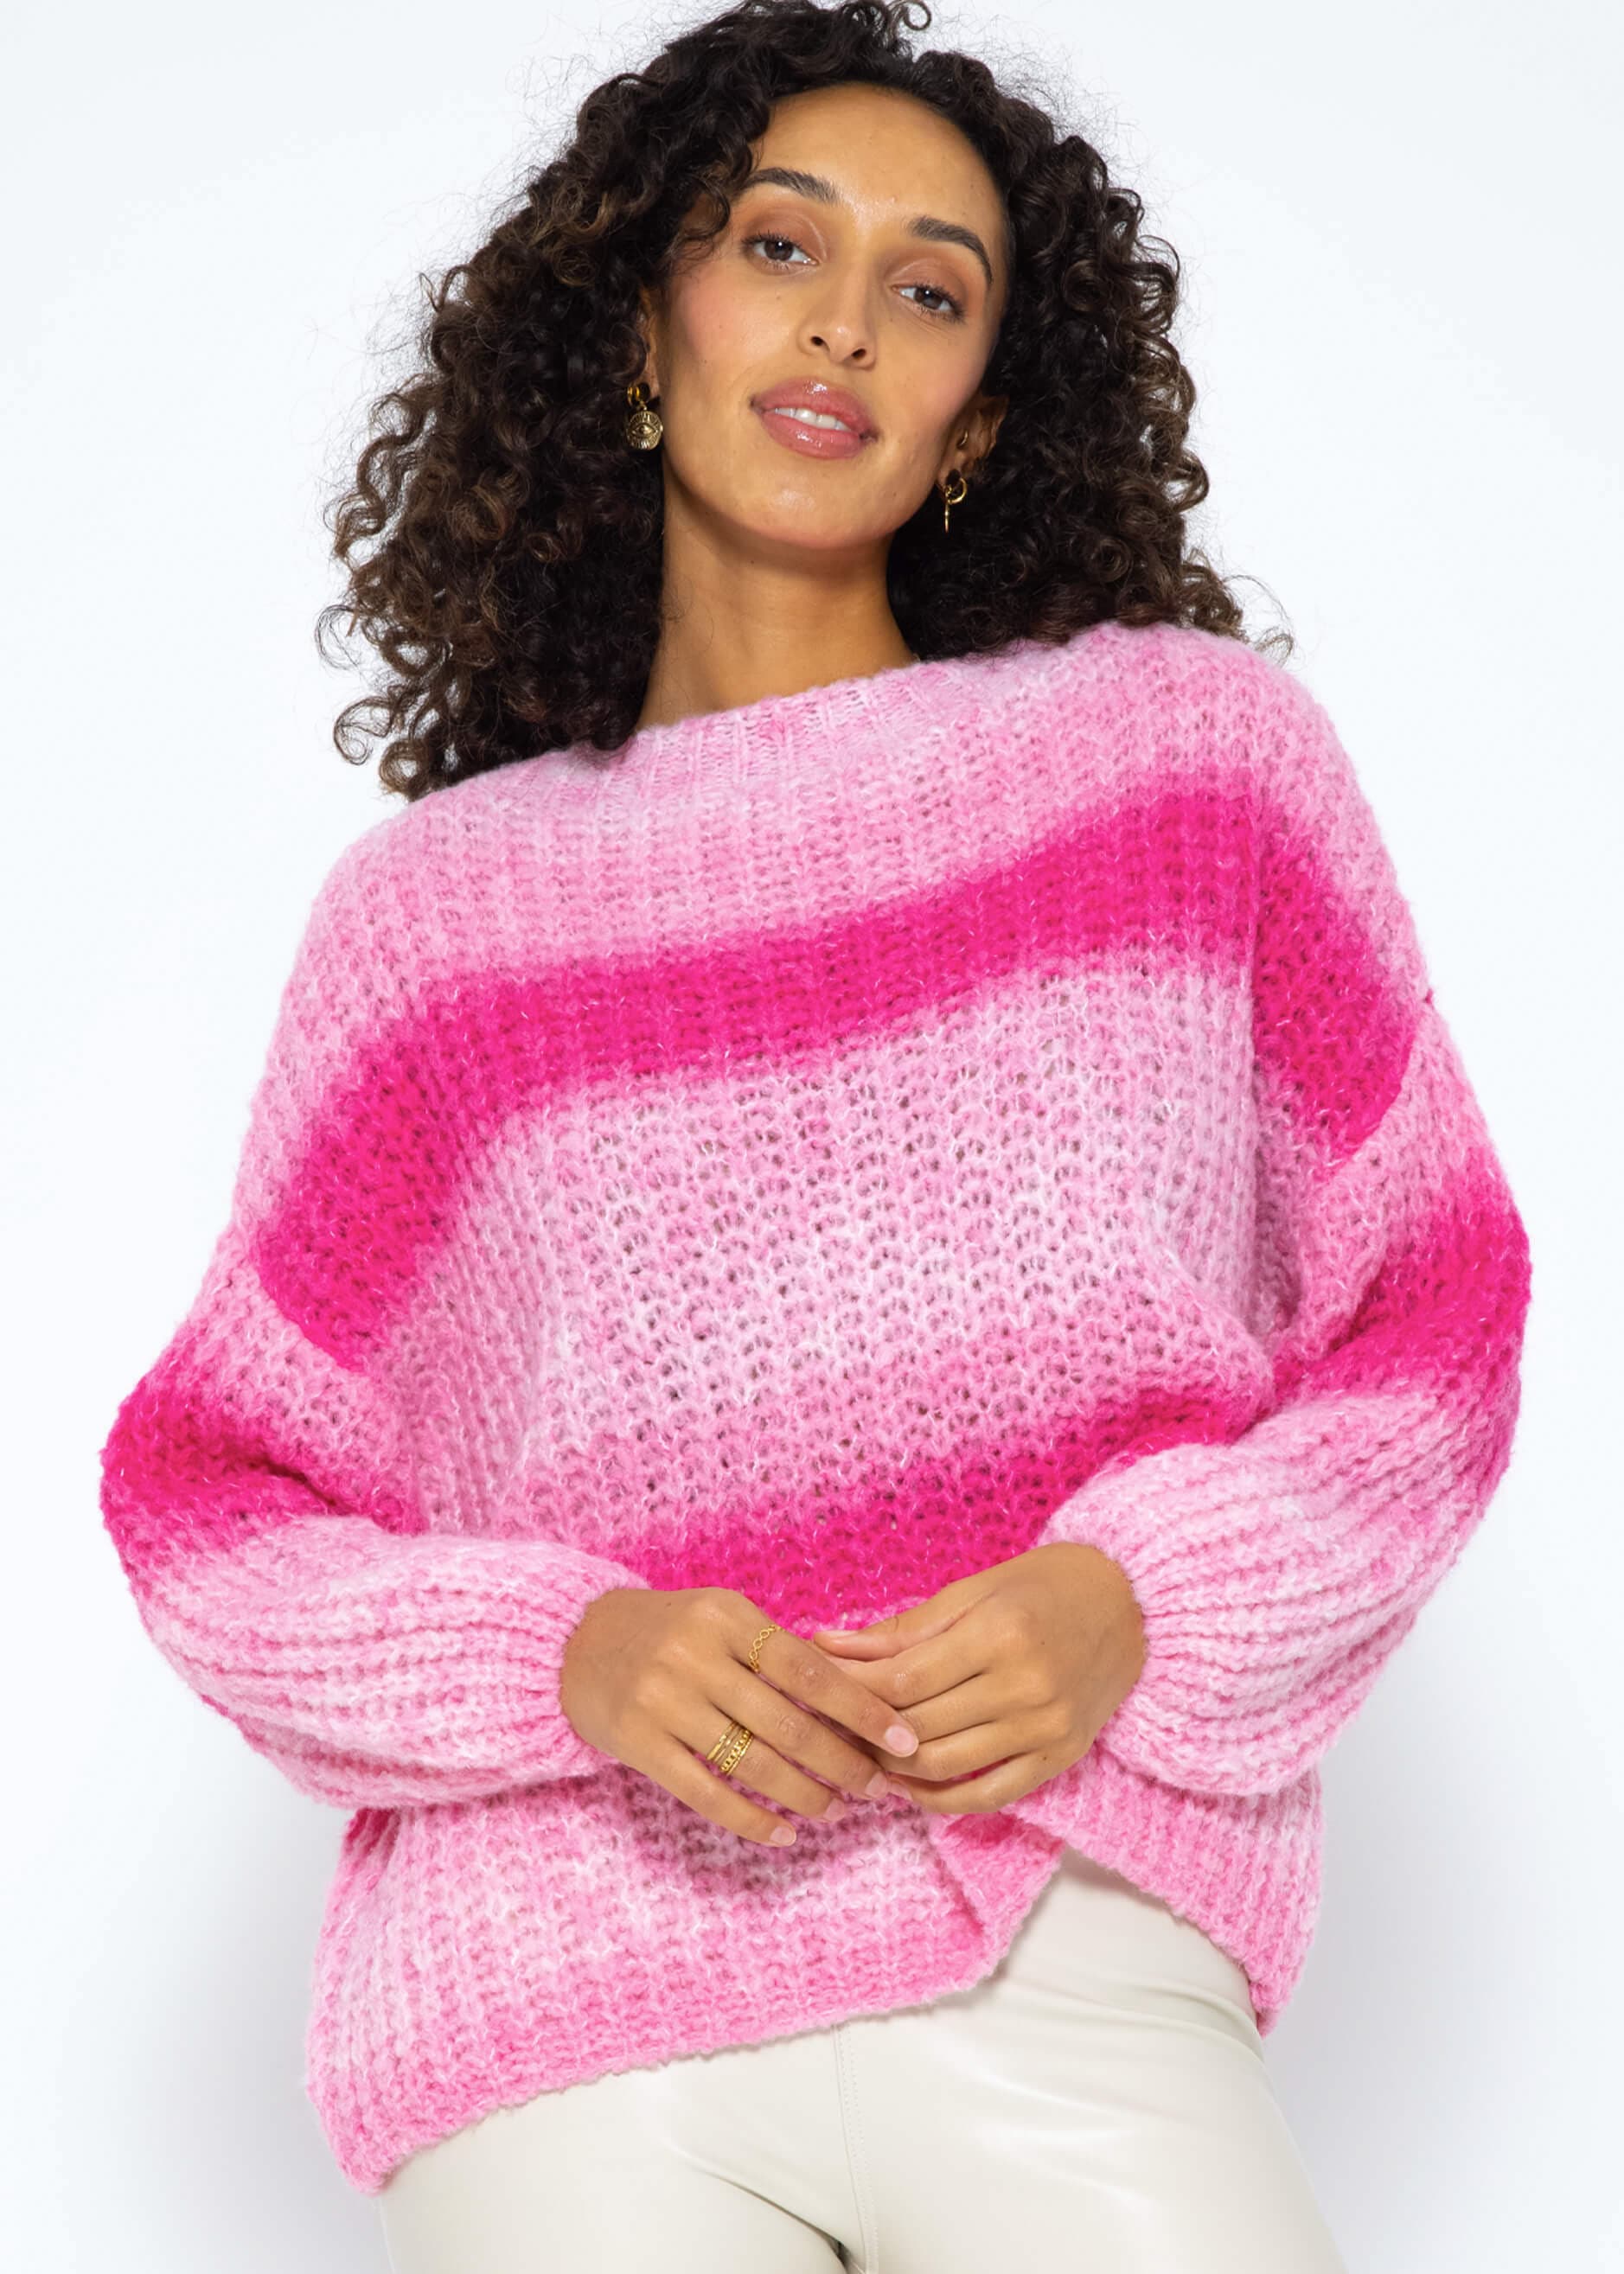 Strickpullover mit Farbverlauf - rosa | Pullover | Bekleidung | SASSYCLASSY | Strickpullover